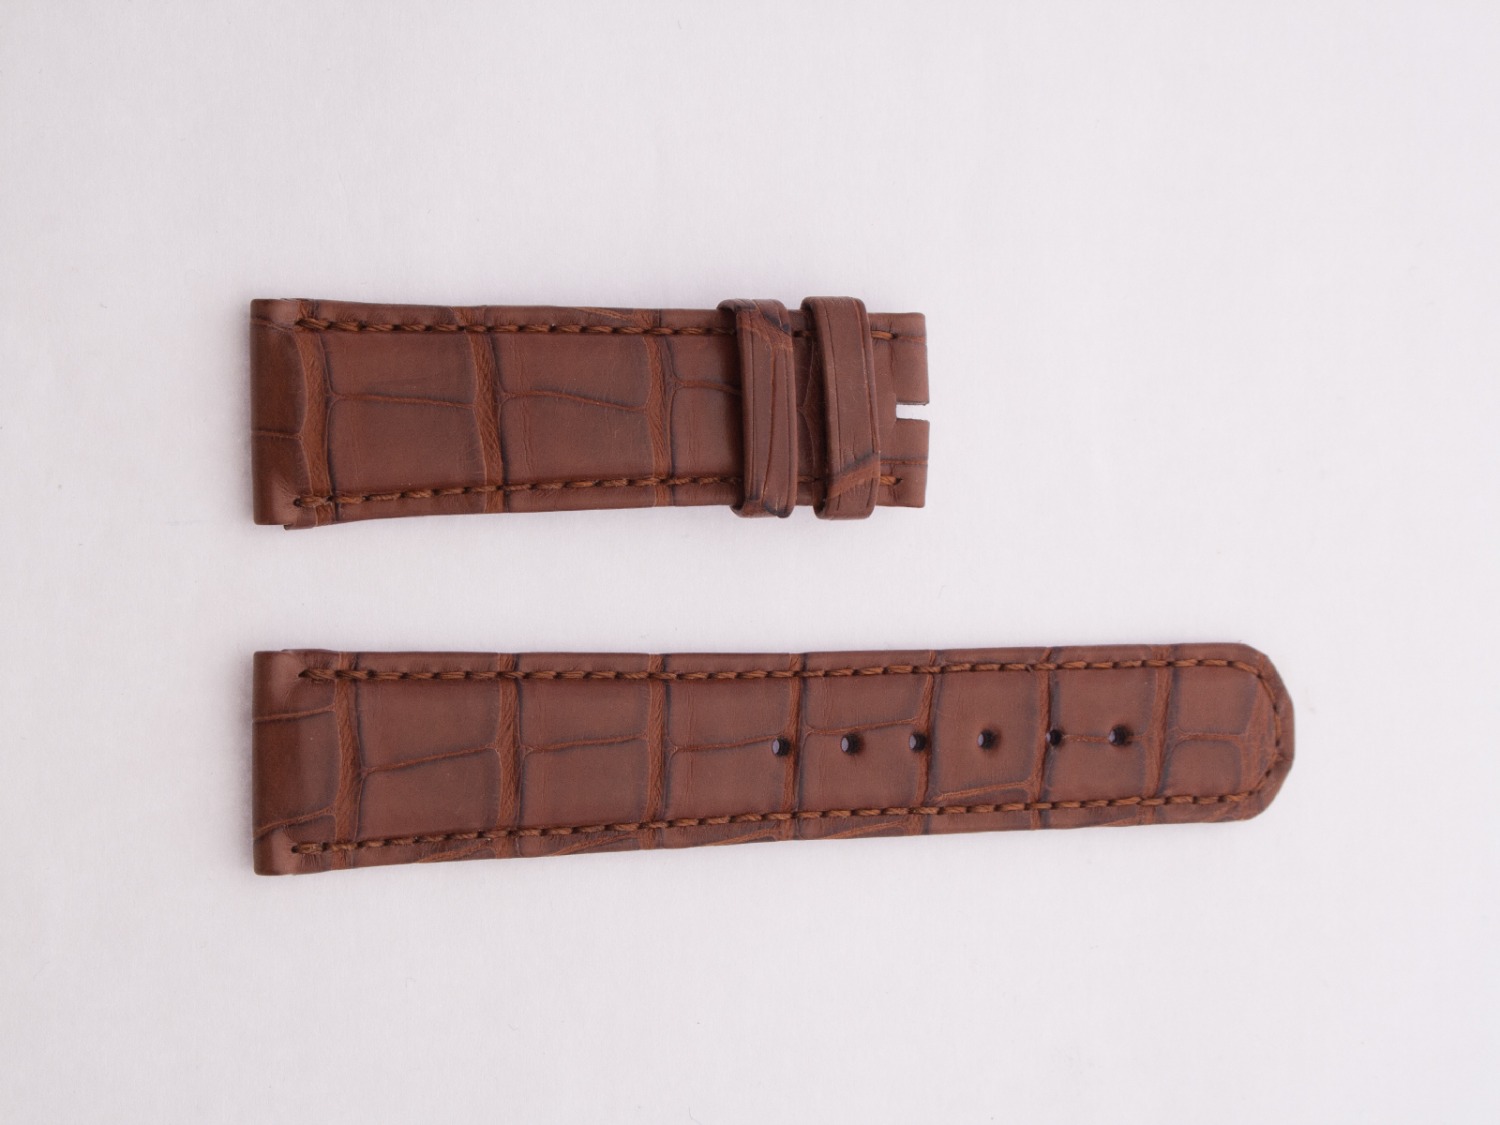 Leather A. Lange & Sohne Strap, brown